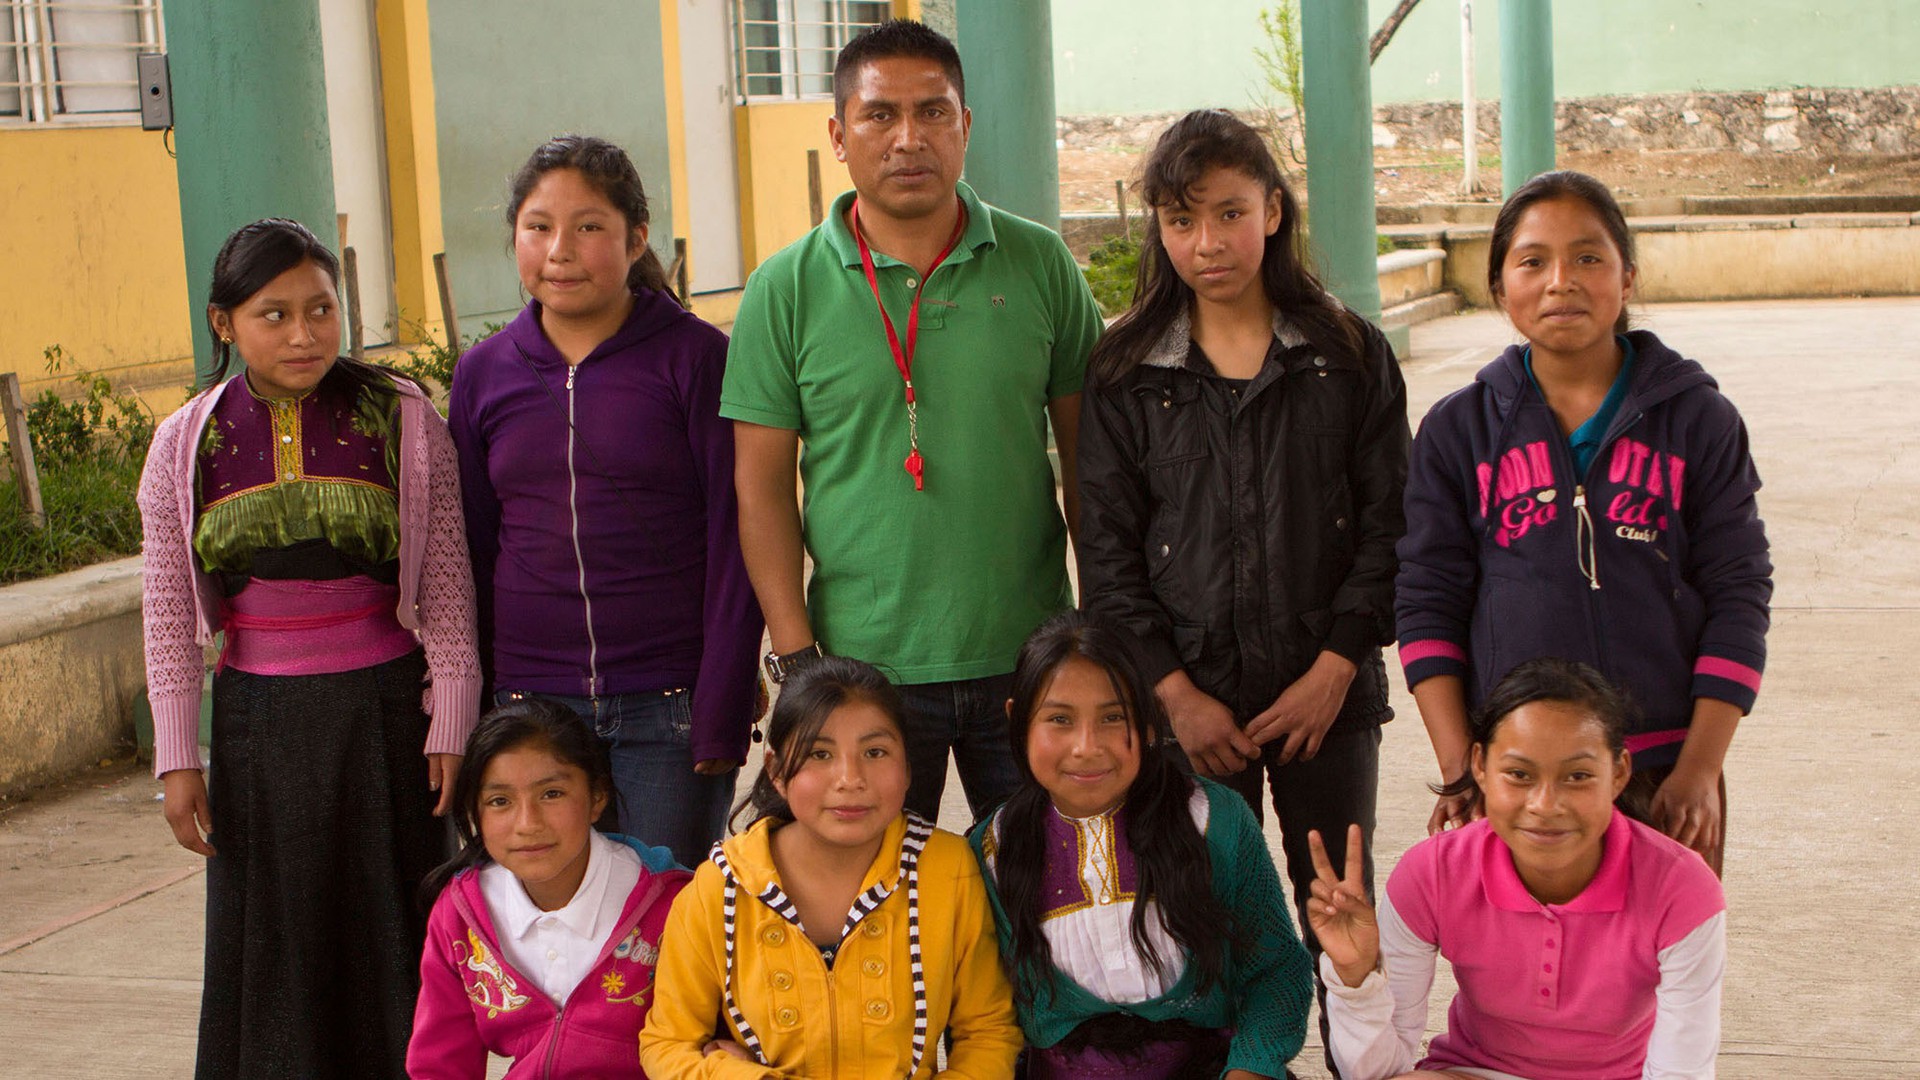 Octavio Santis and his 5th grade girls basketball team at the Benito Juárez School. (Photo by Alex Lancial.)